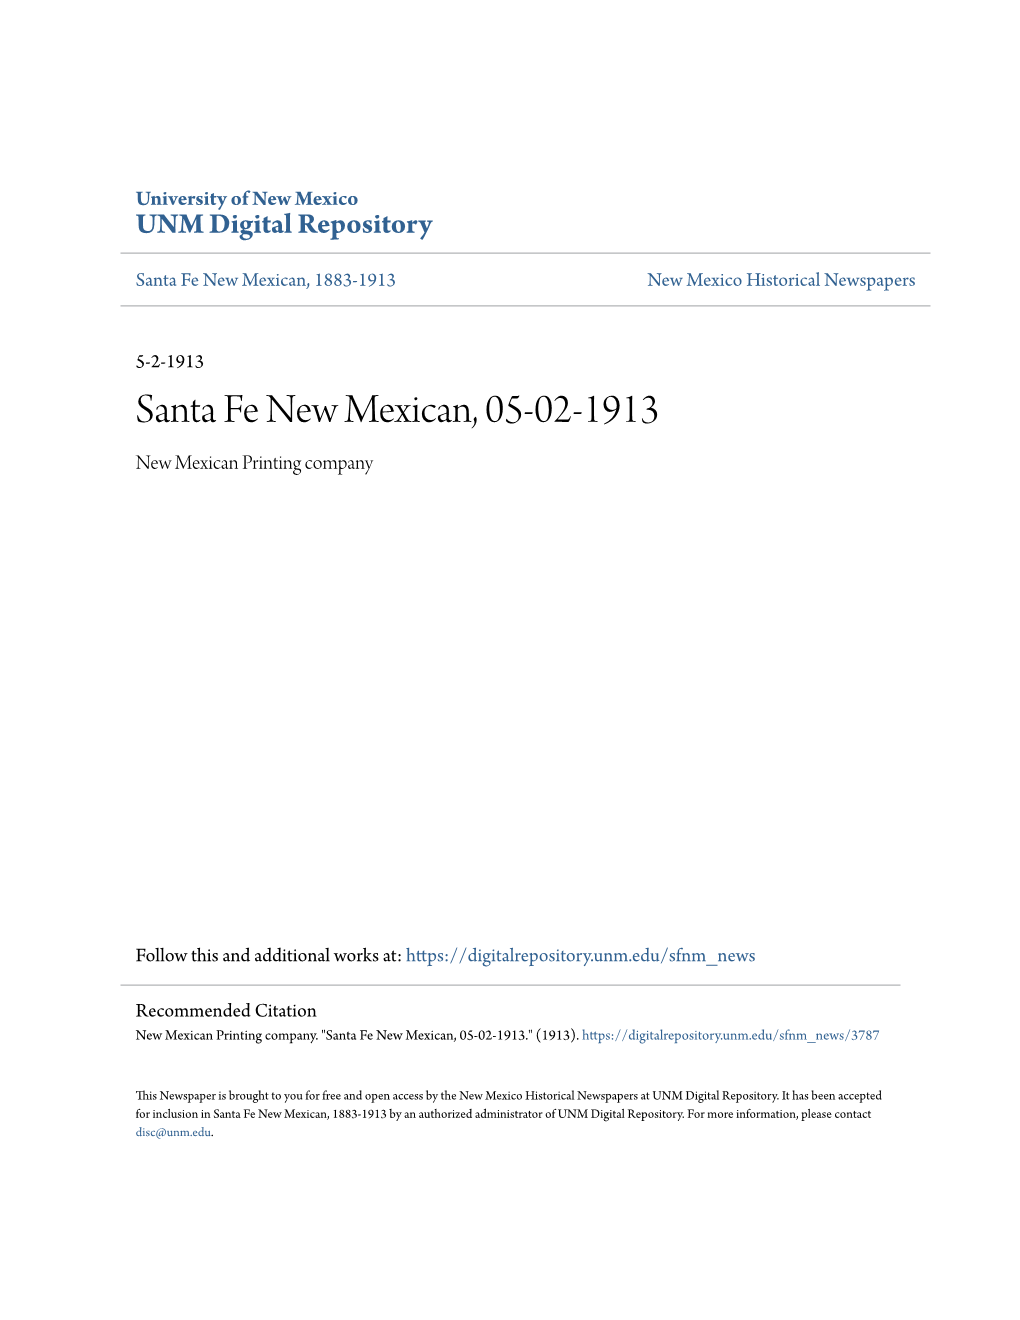 Santa Fe New Mexican, 05-02-1913 New Mexican Printing Company